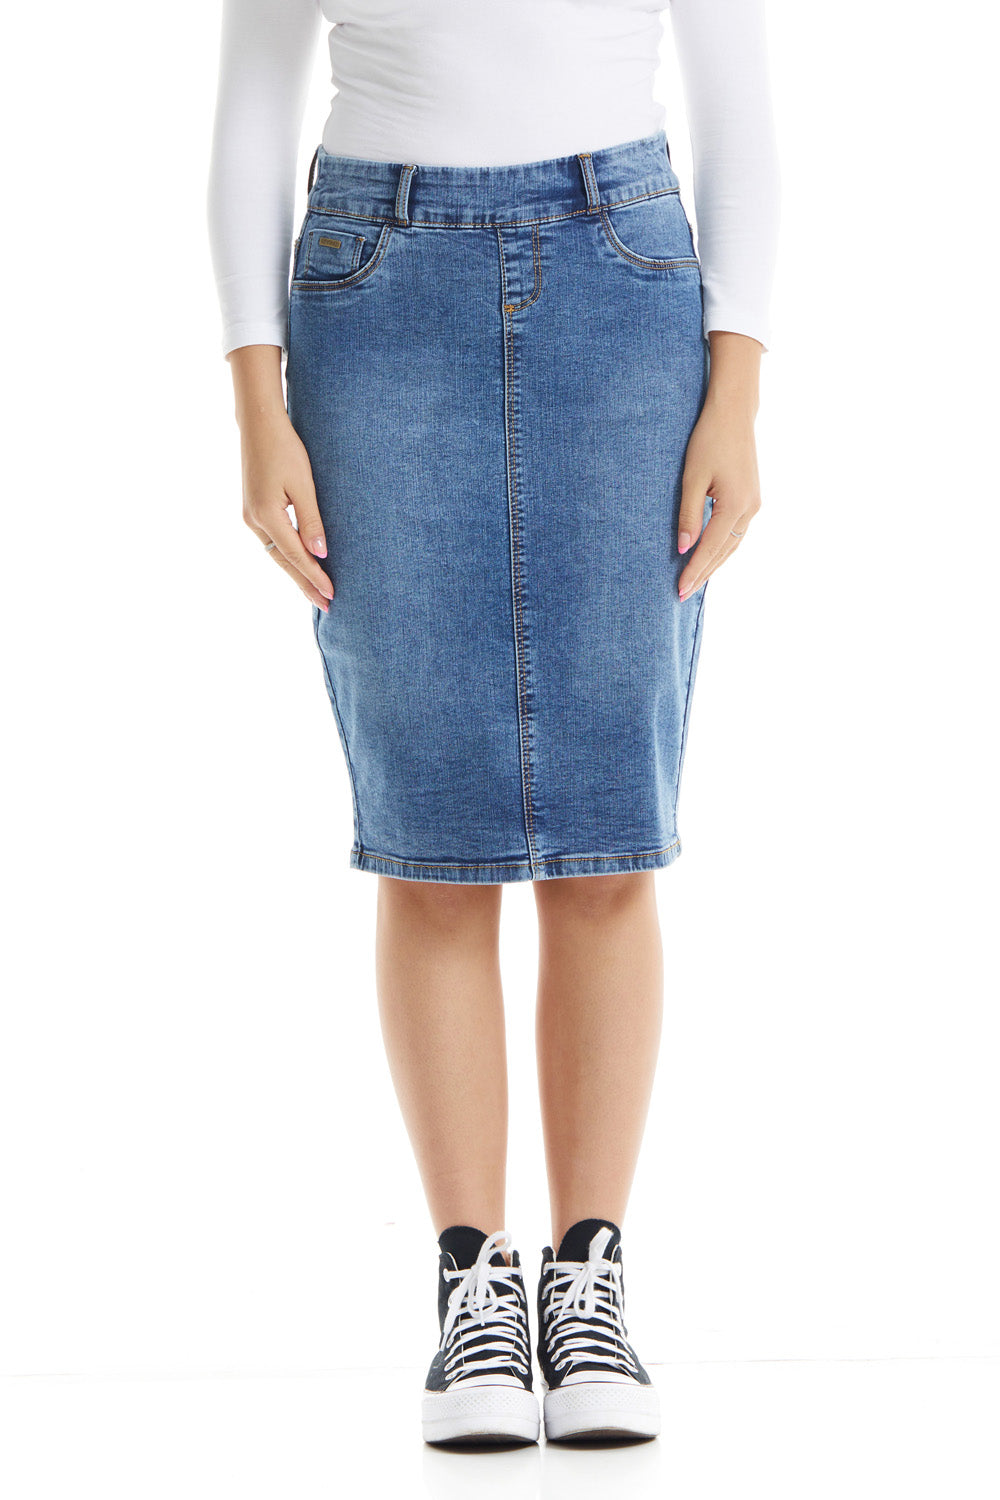 Esteez BROOKLYN Denim Skirt - Below the knee Jean Skirt for women - Vintage Blue